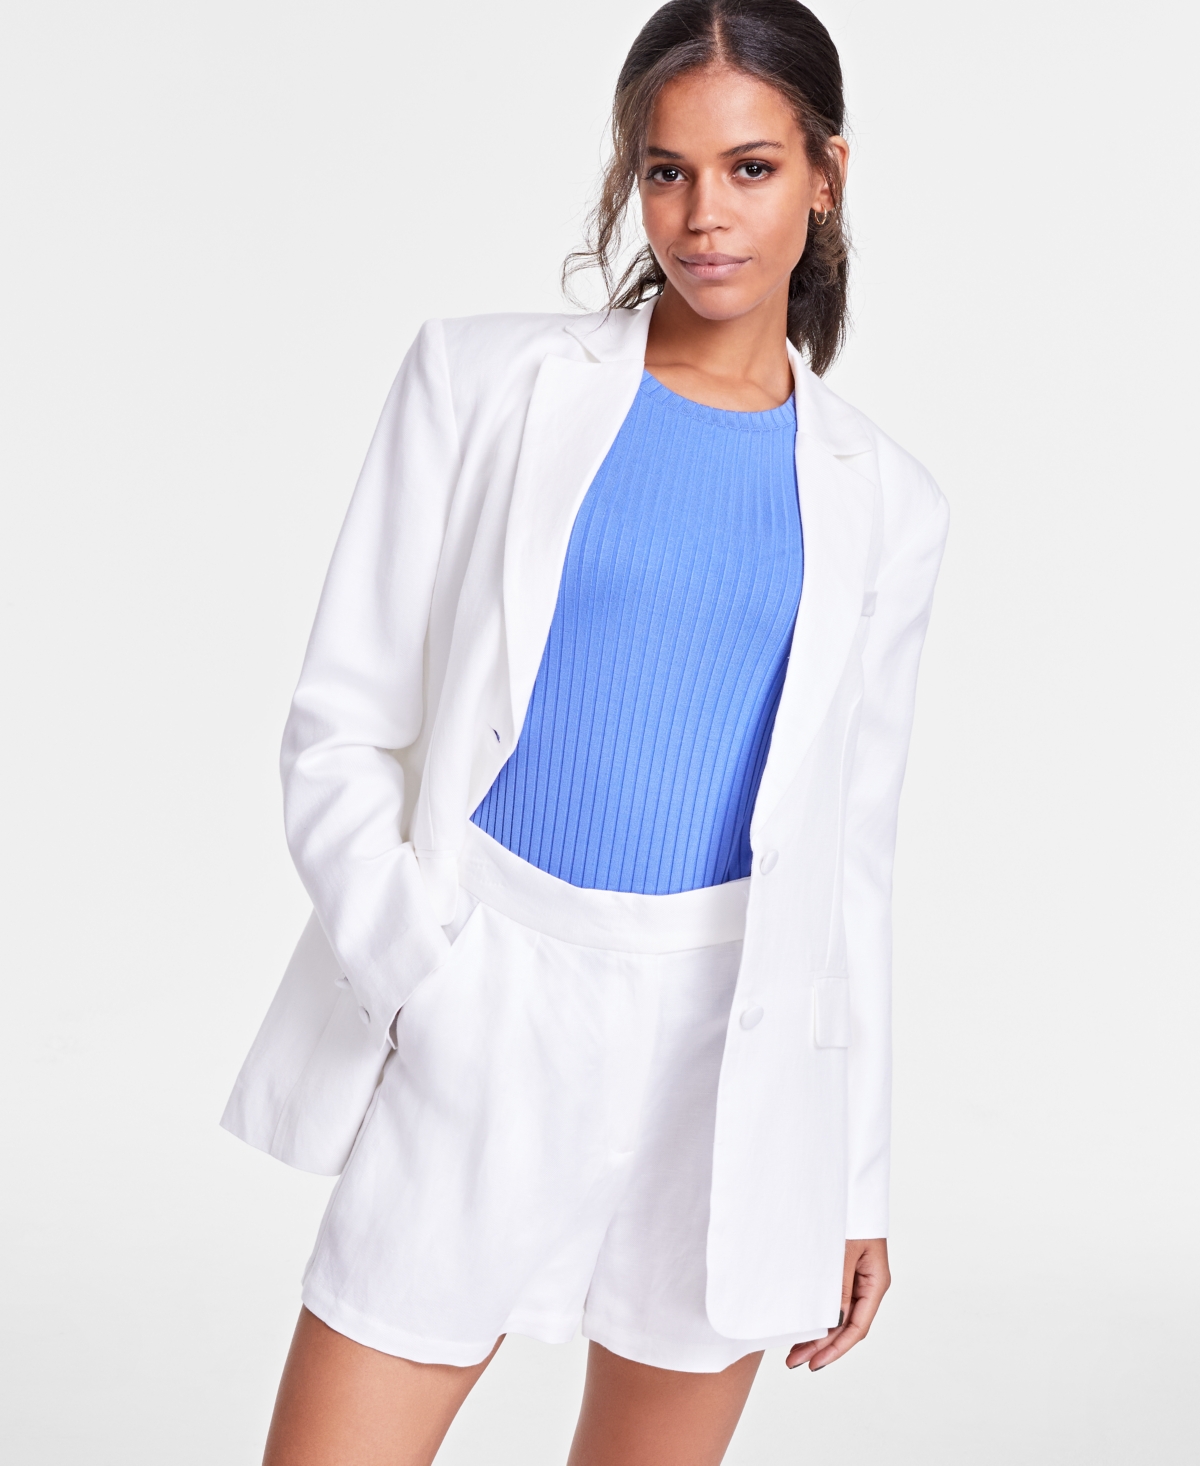 Women's Linen Blend Two-Button Blazer, Created for Macy's - White